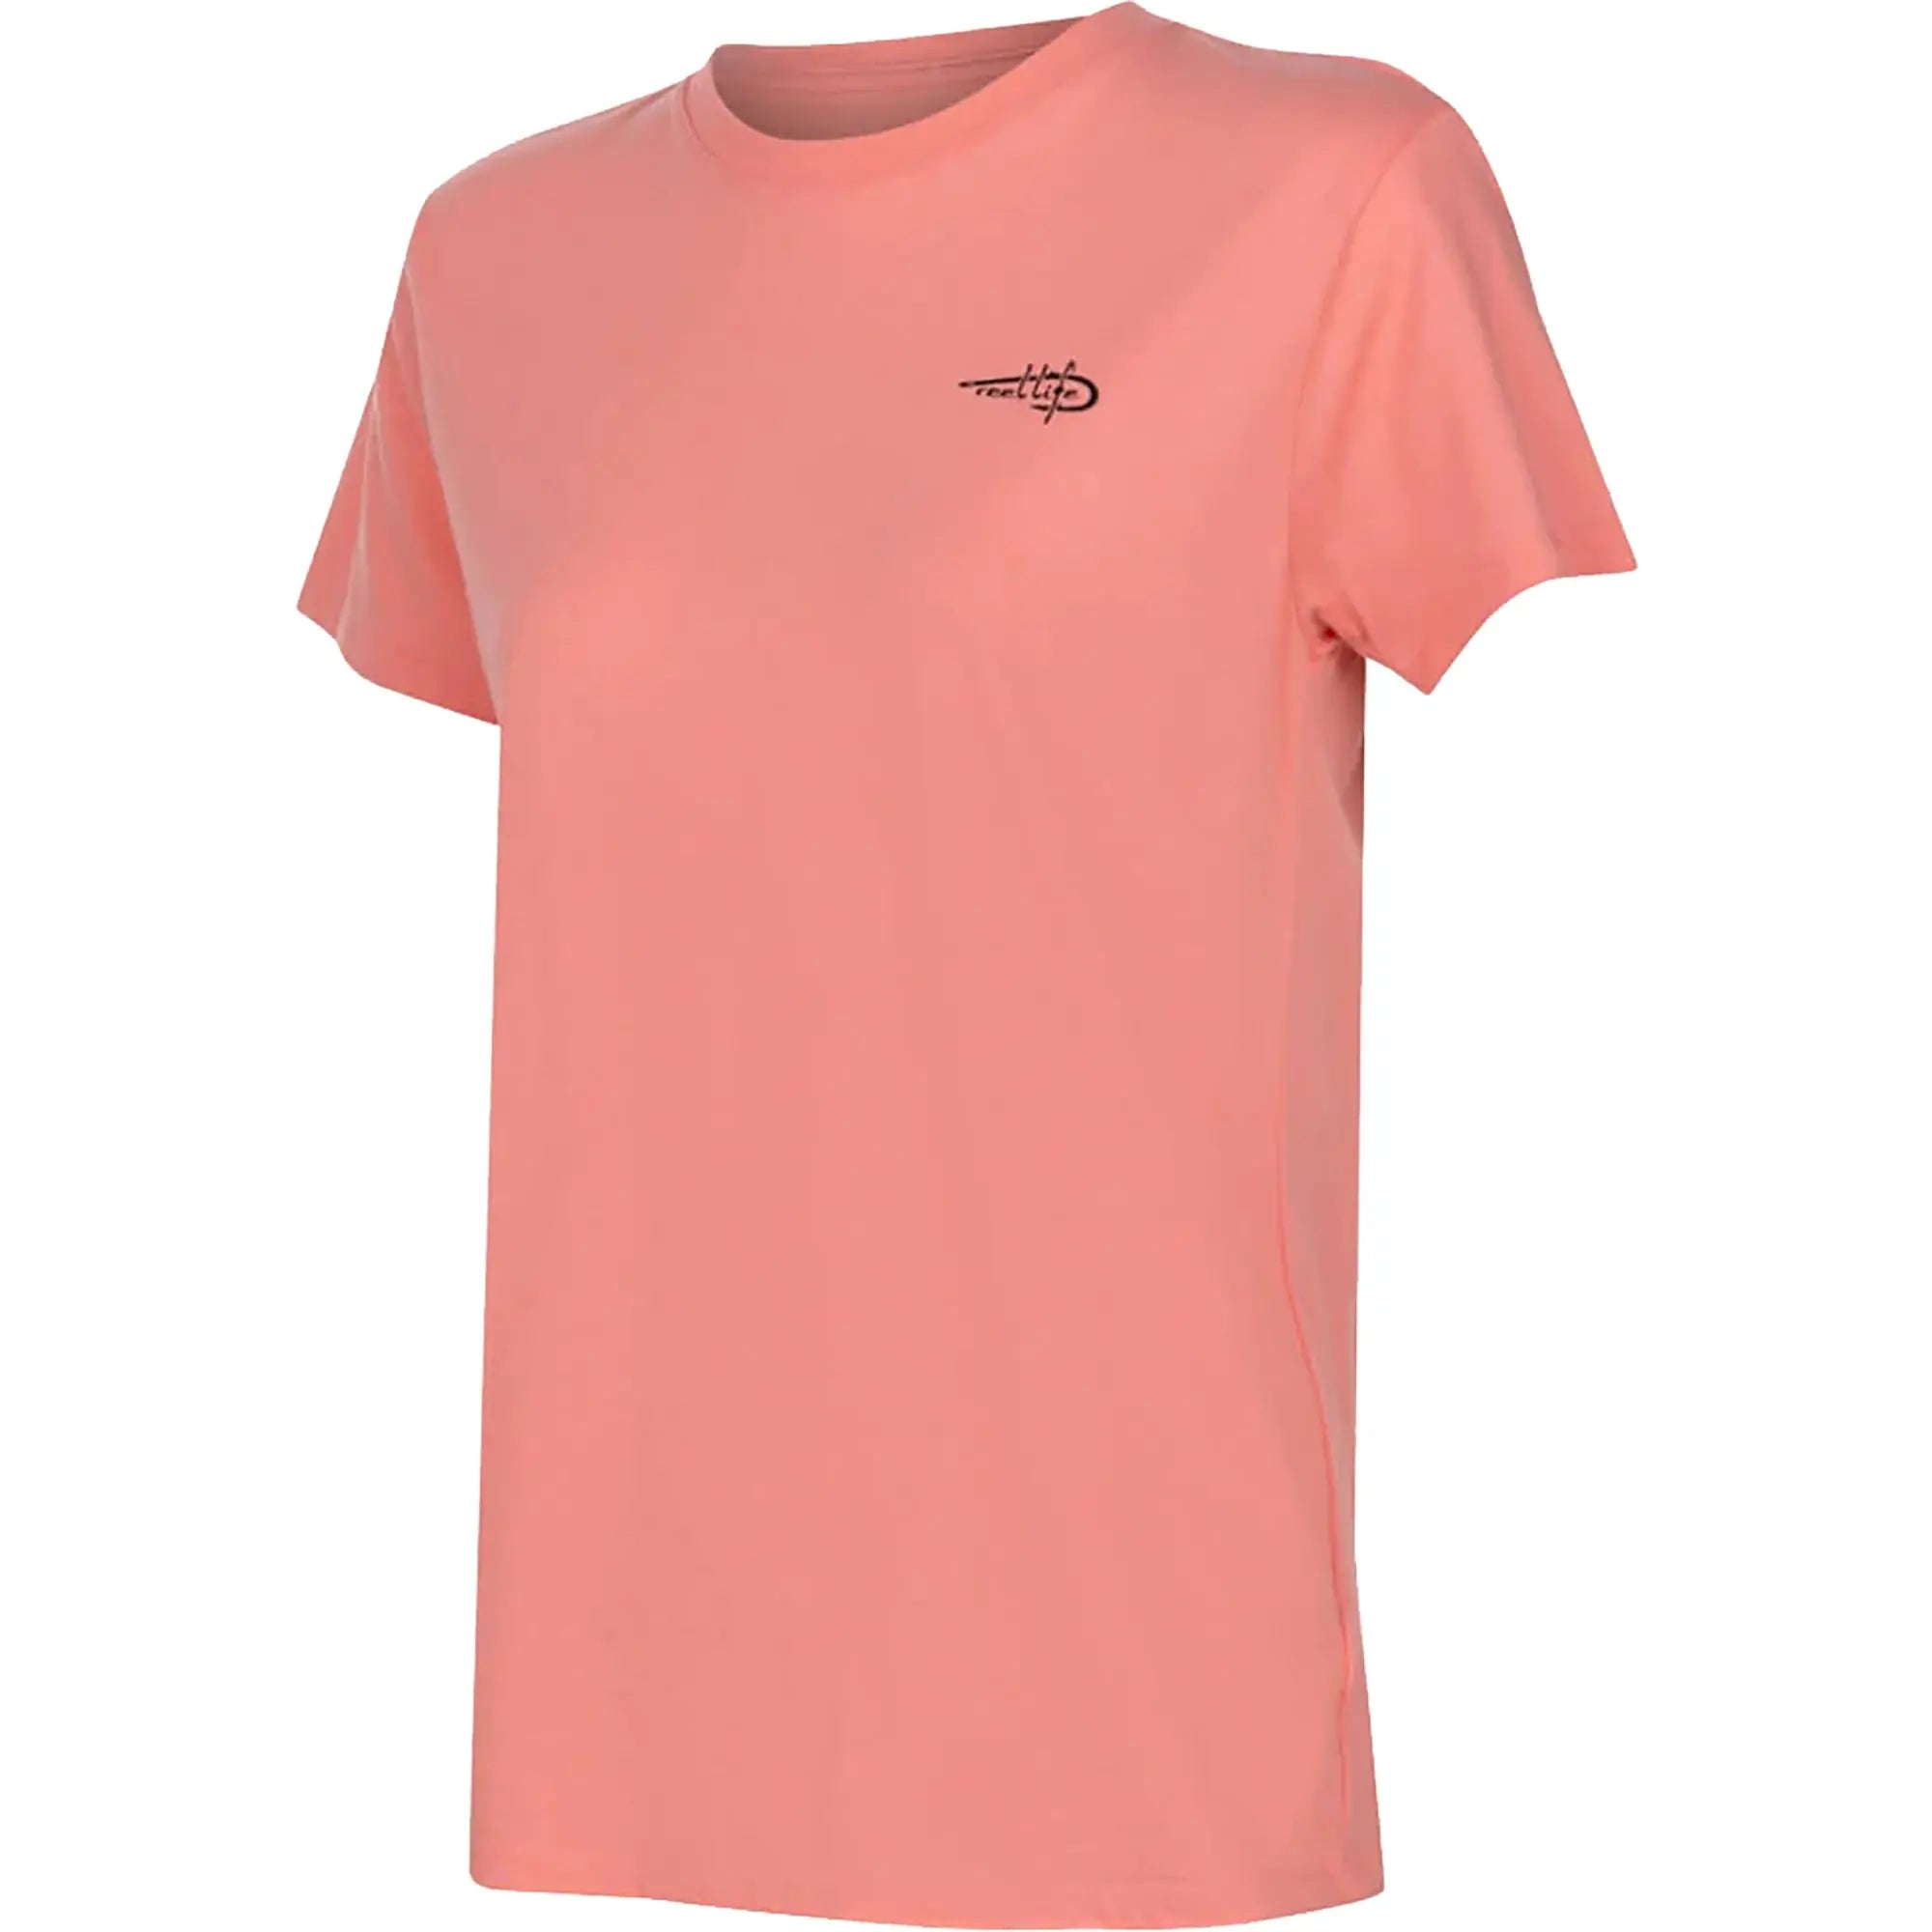 Reel Life Women's Mallow Trippy Surfer T-Shirt - Salmon Rose